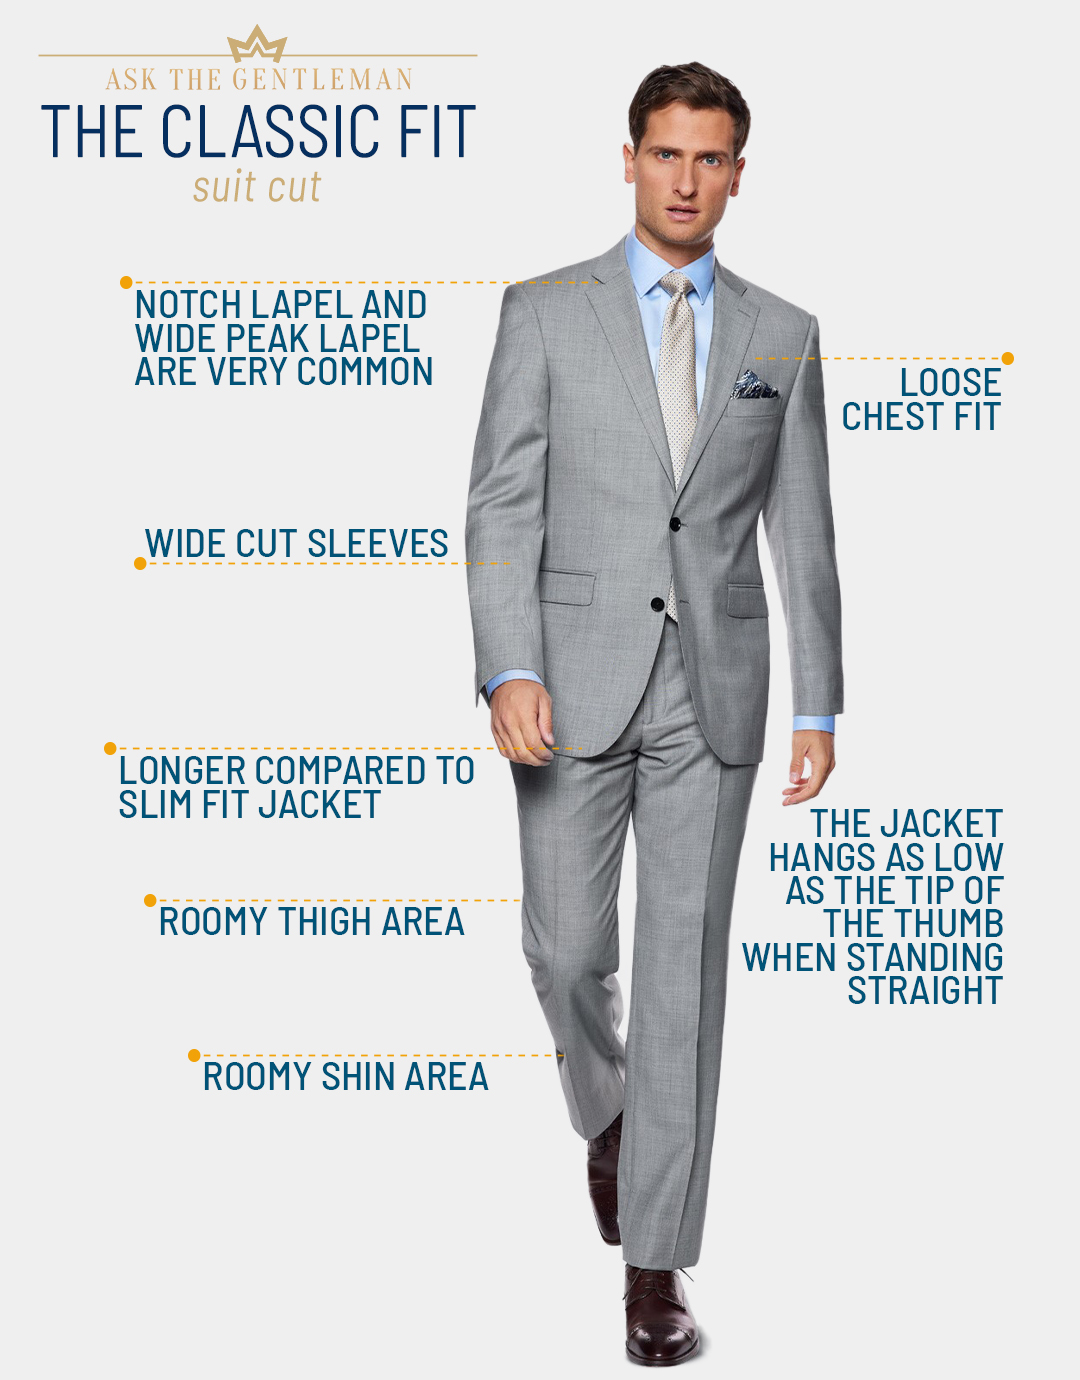 What is a classic fit suit cut